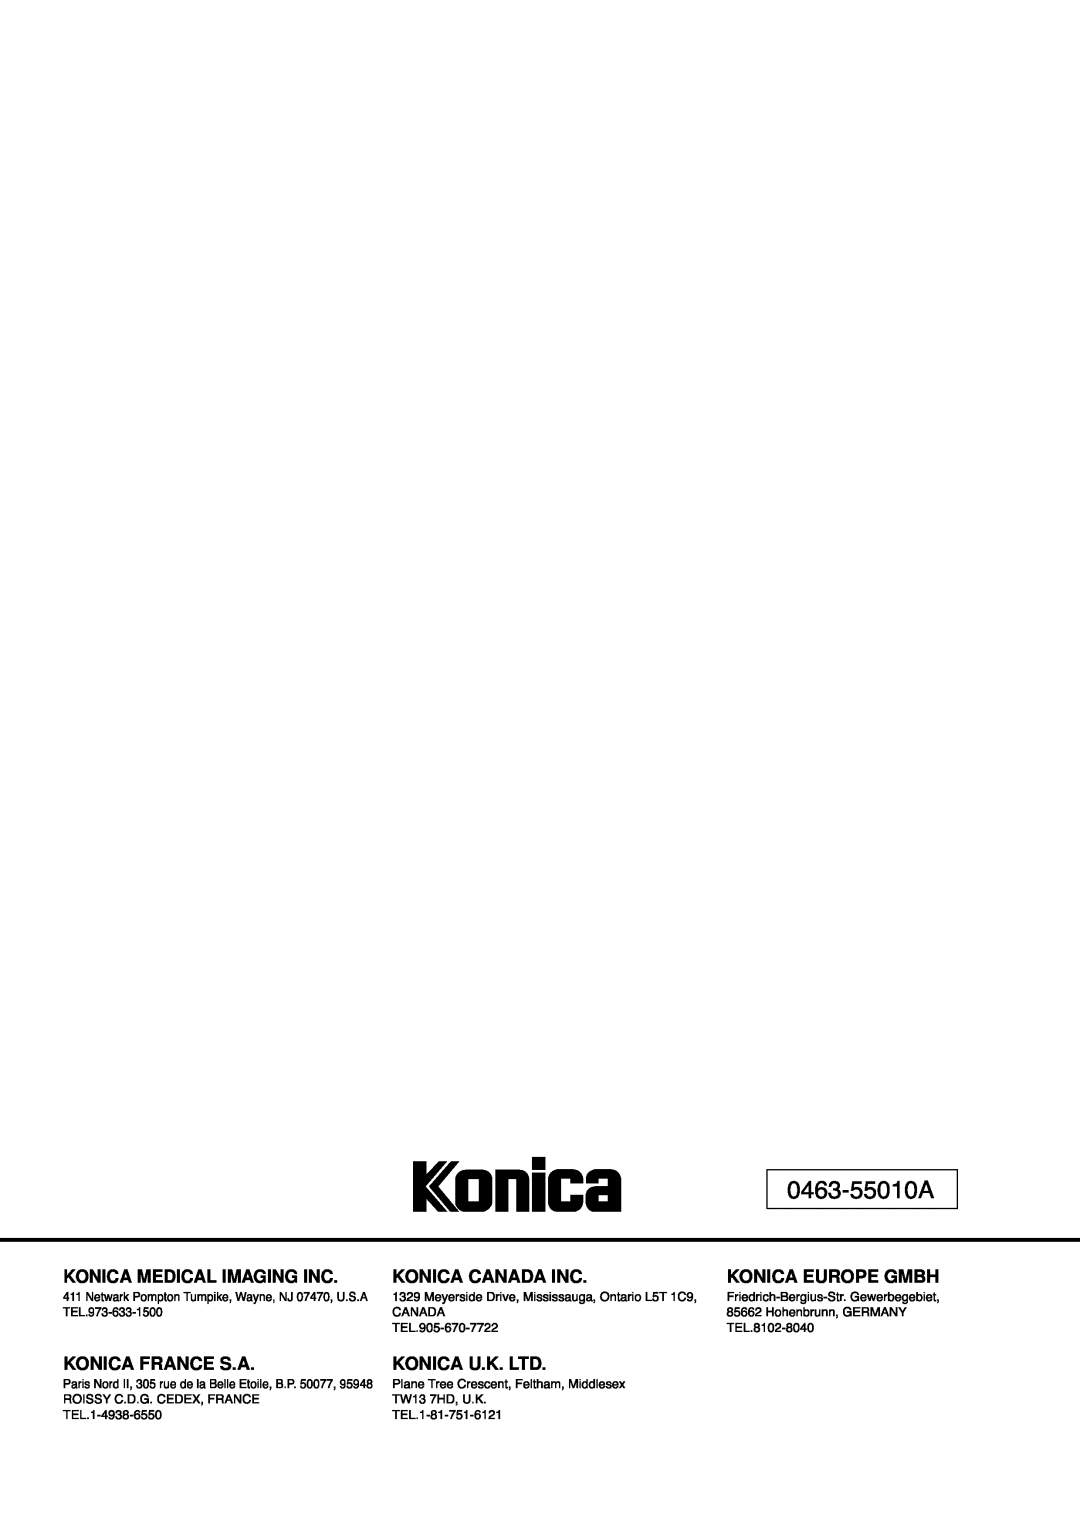 Konica Minolta 752 operation manual 